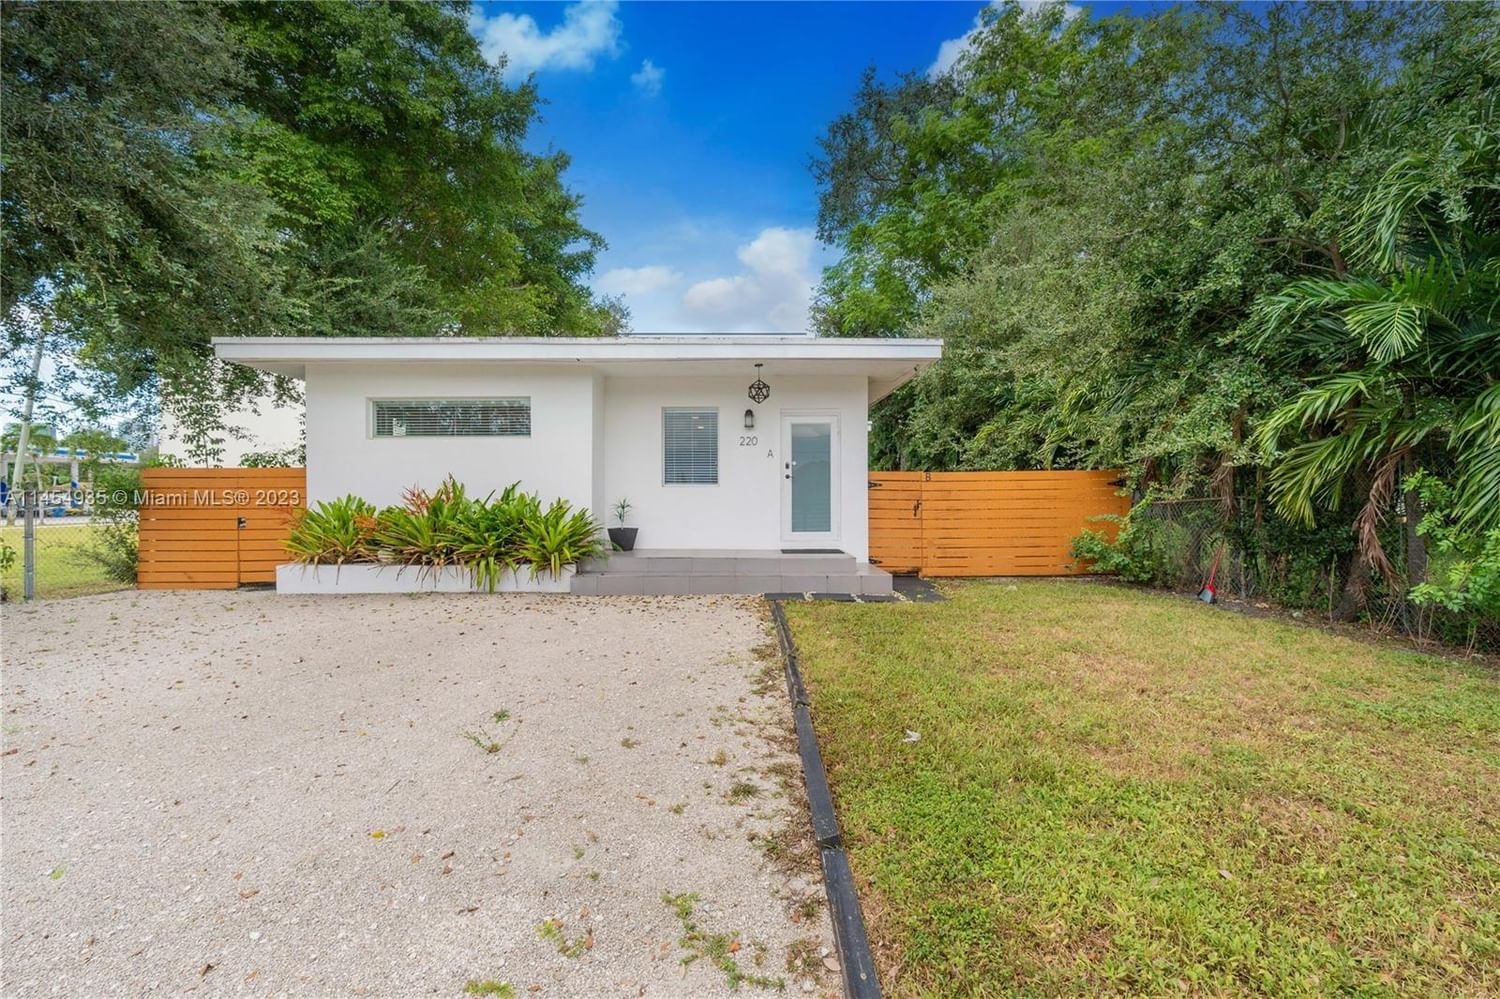 Real estate property located at 220 47th St, Miami-Dade County, Miami, FL